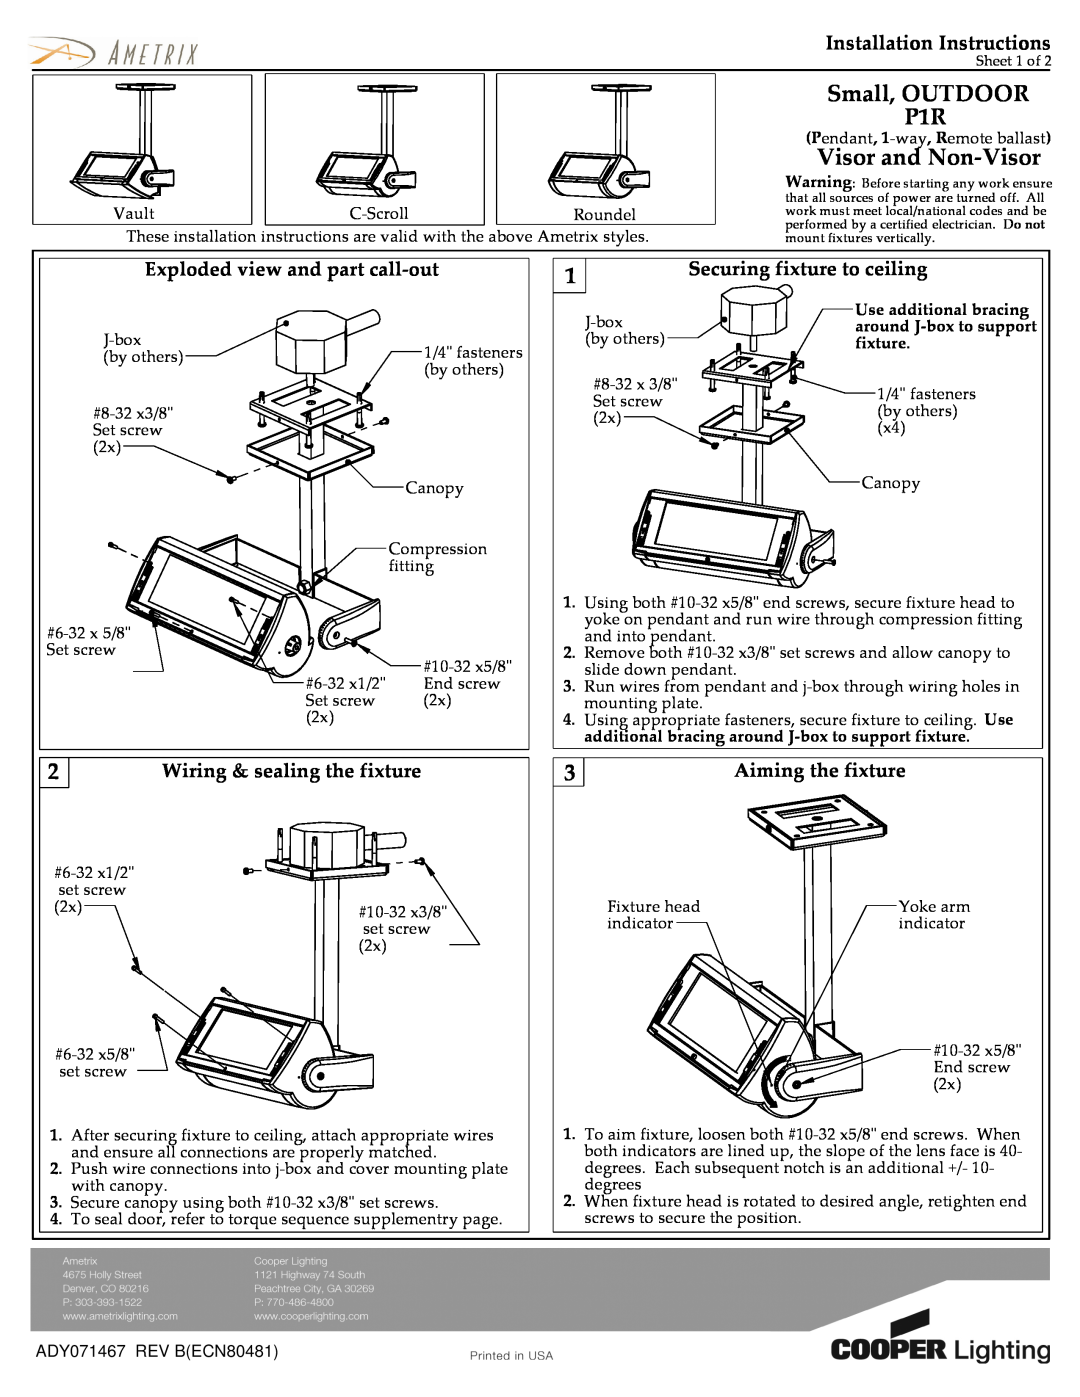 Cooper Lighting installation instructions Small, OUTDOOR P1R, Visor and Non-Visor, Installation Instructions 